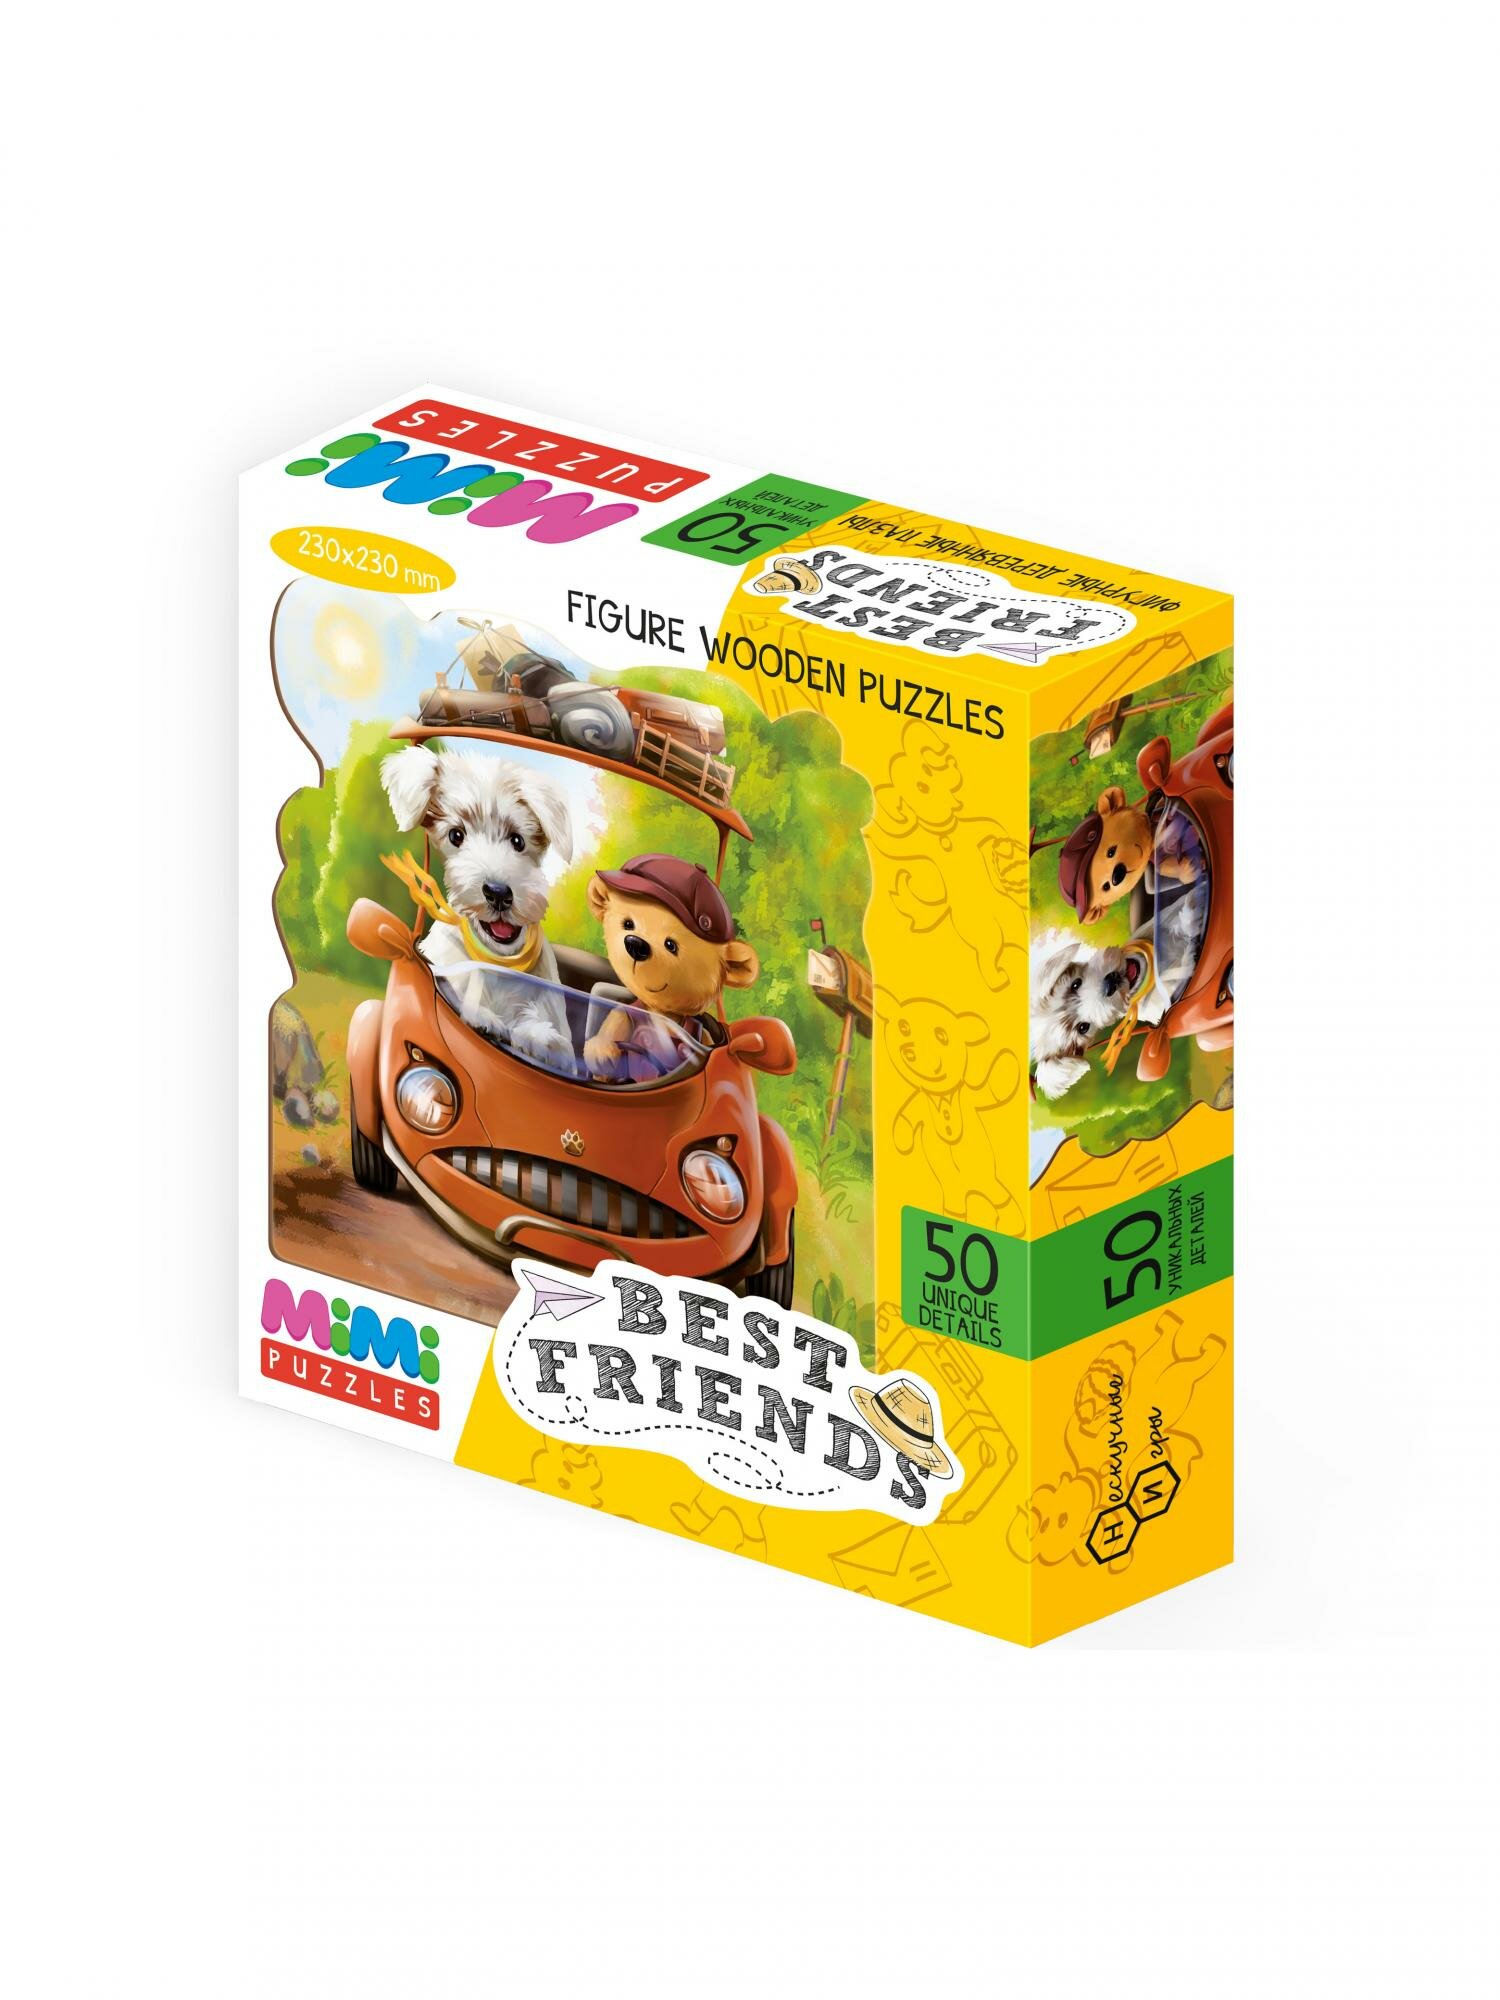 MIMI Puzzles Фигурный деревянный пазл BEST FRIENDS арт.8418 (мрц 555 руб) /36